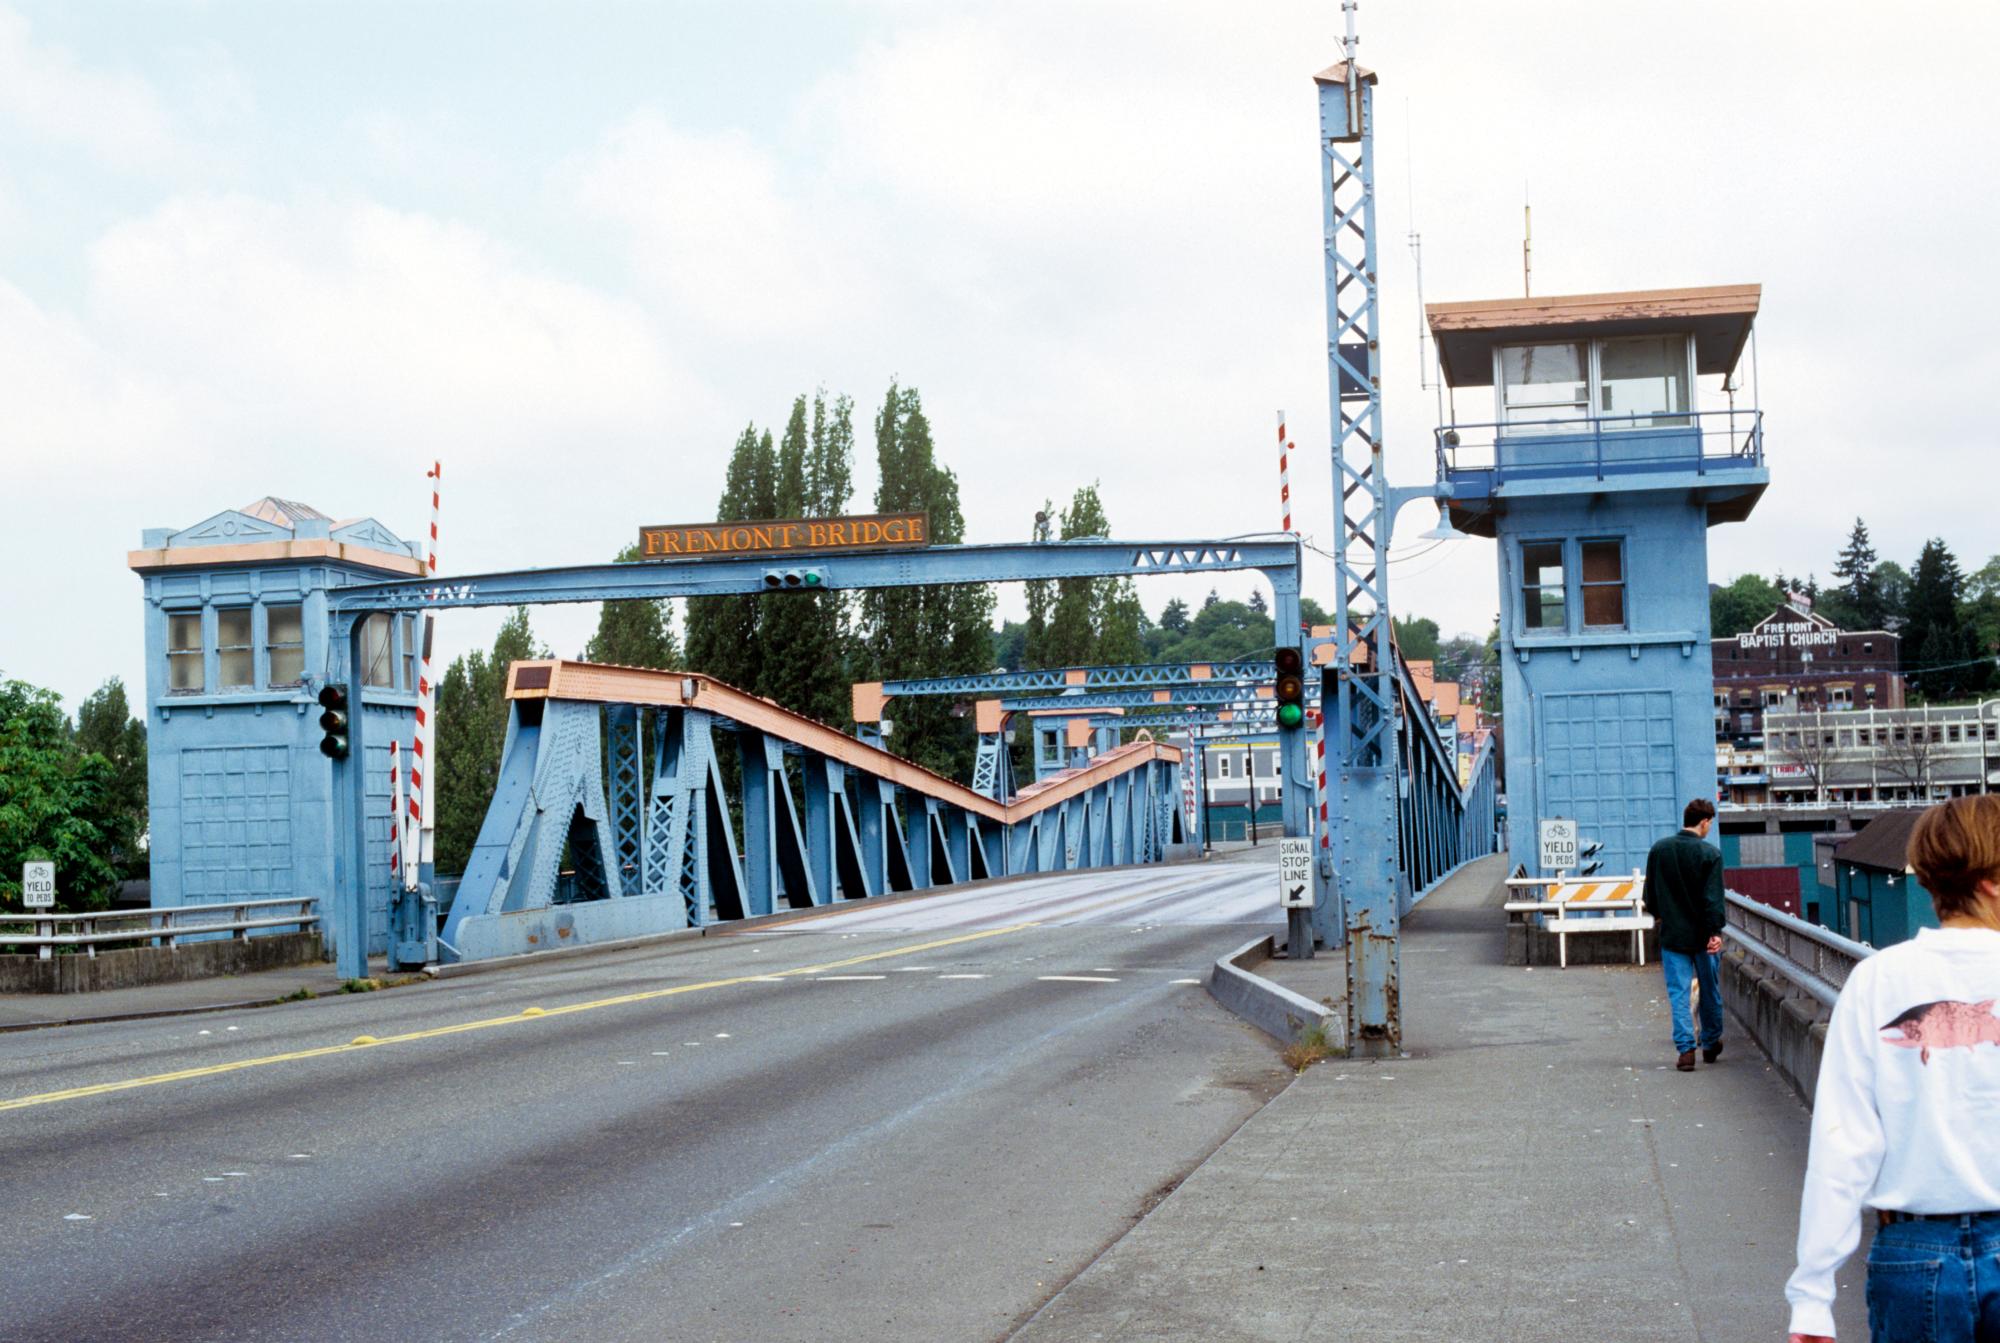 Seattle (1995) - Fremont Bridge